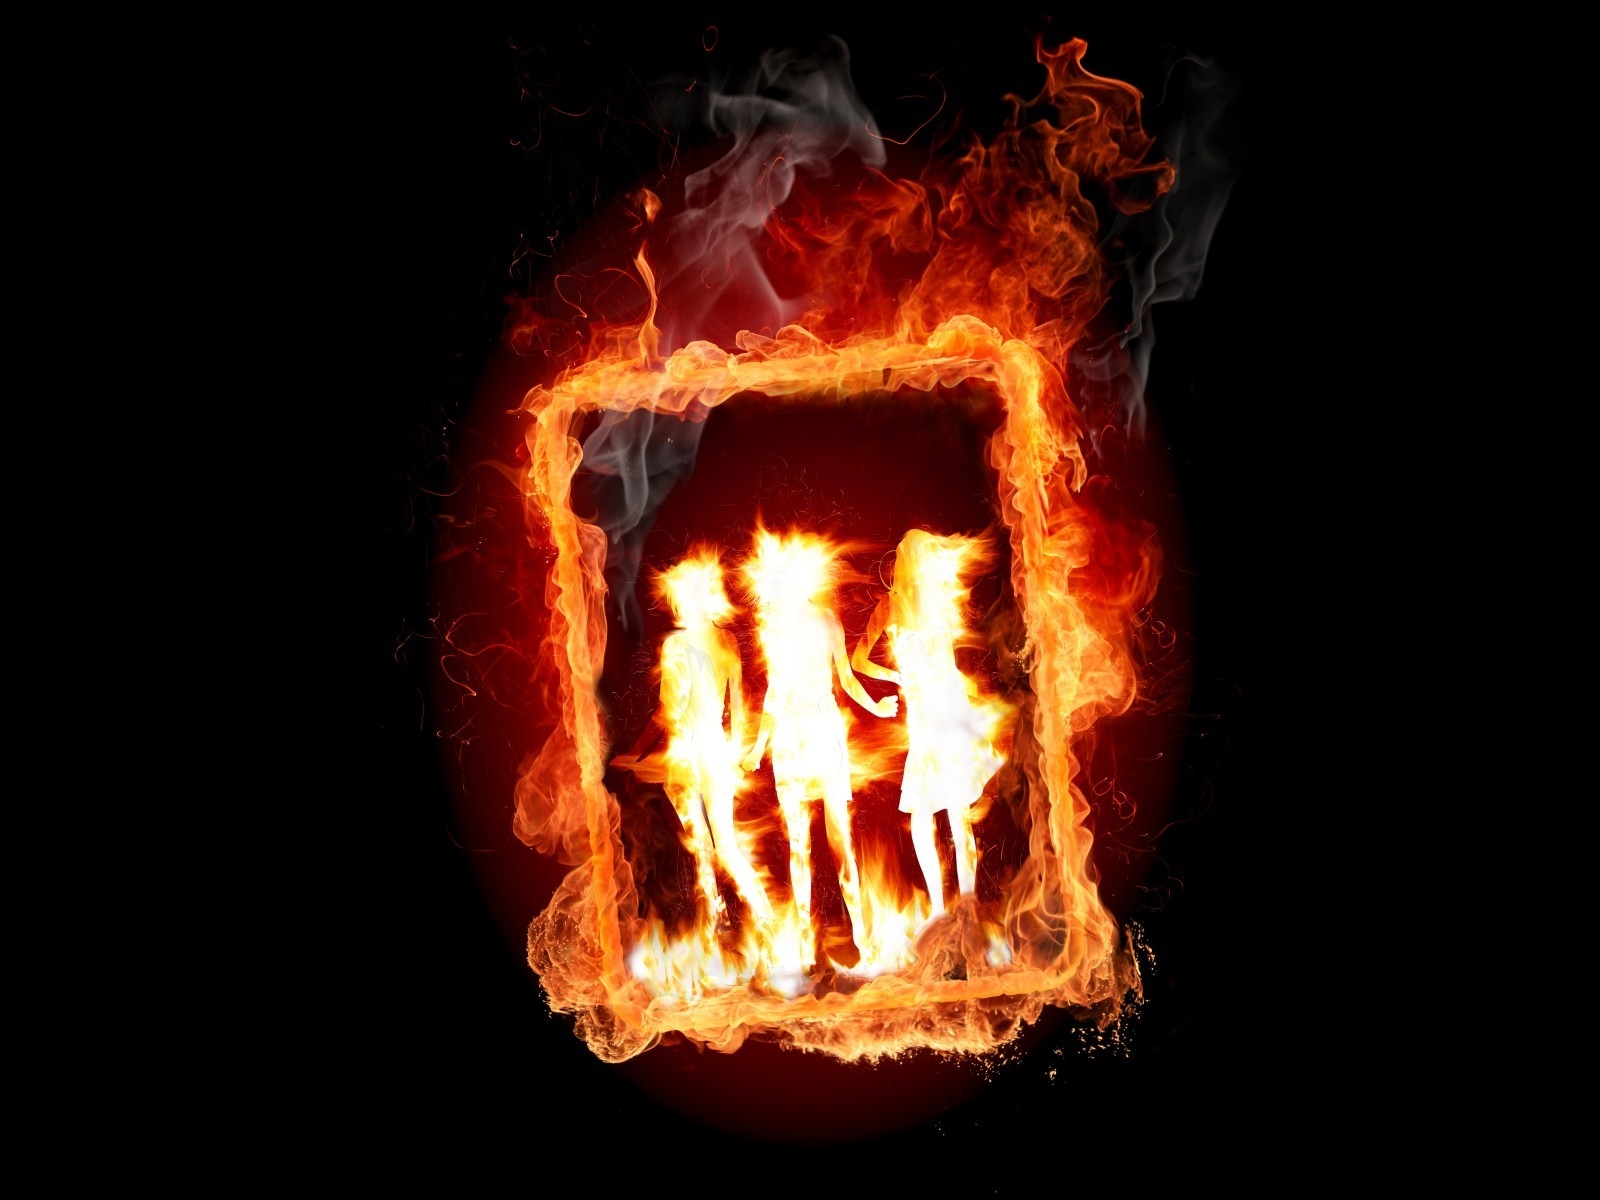 Girl Frame in Fire for 1600 x 1200 resolution